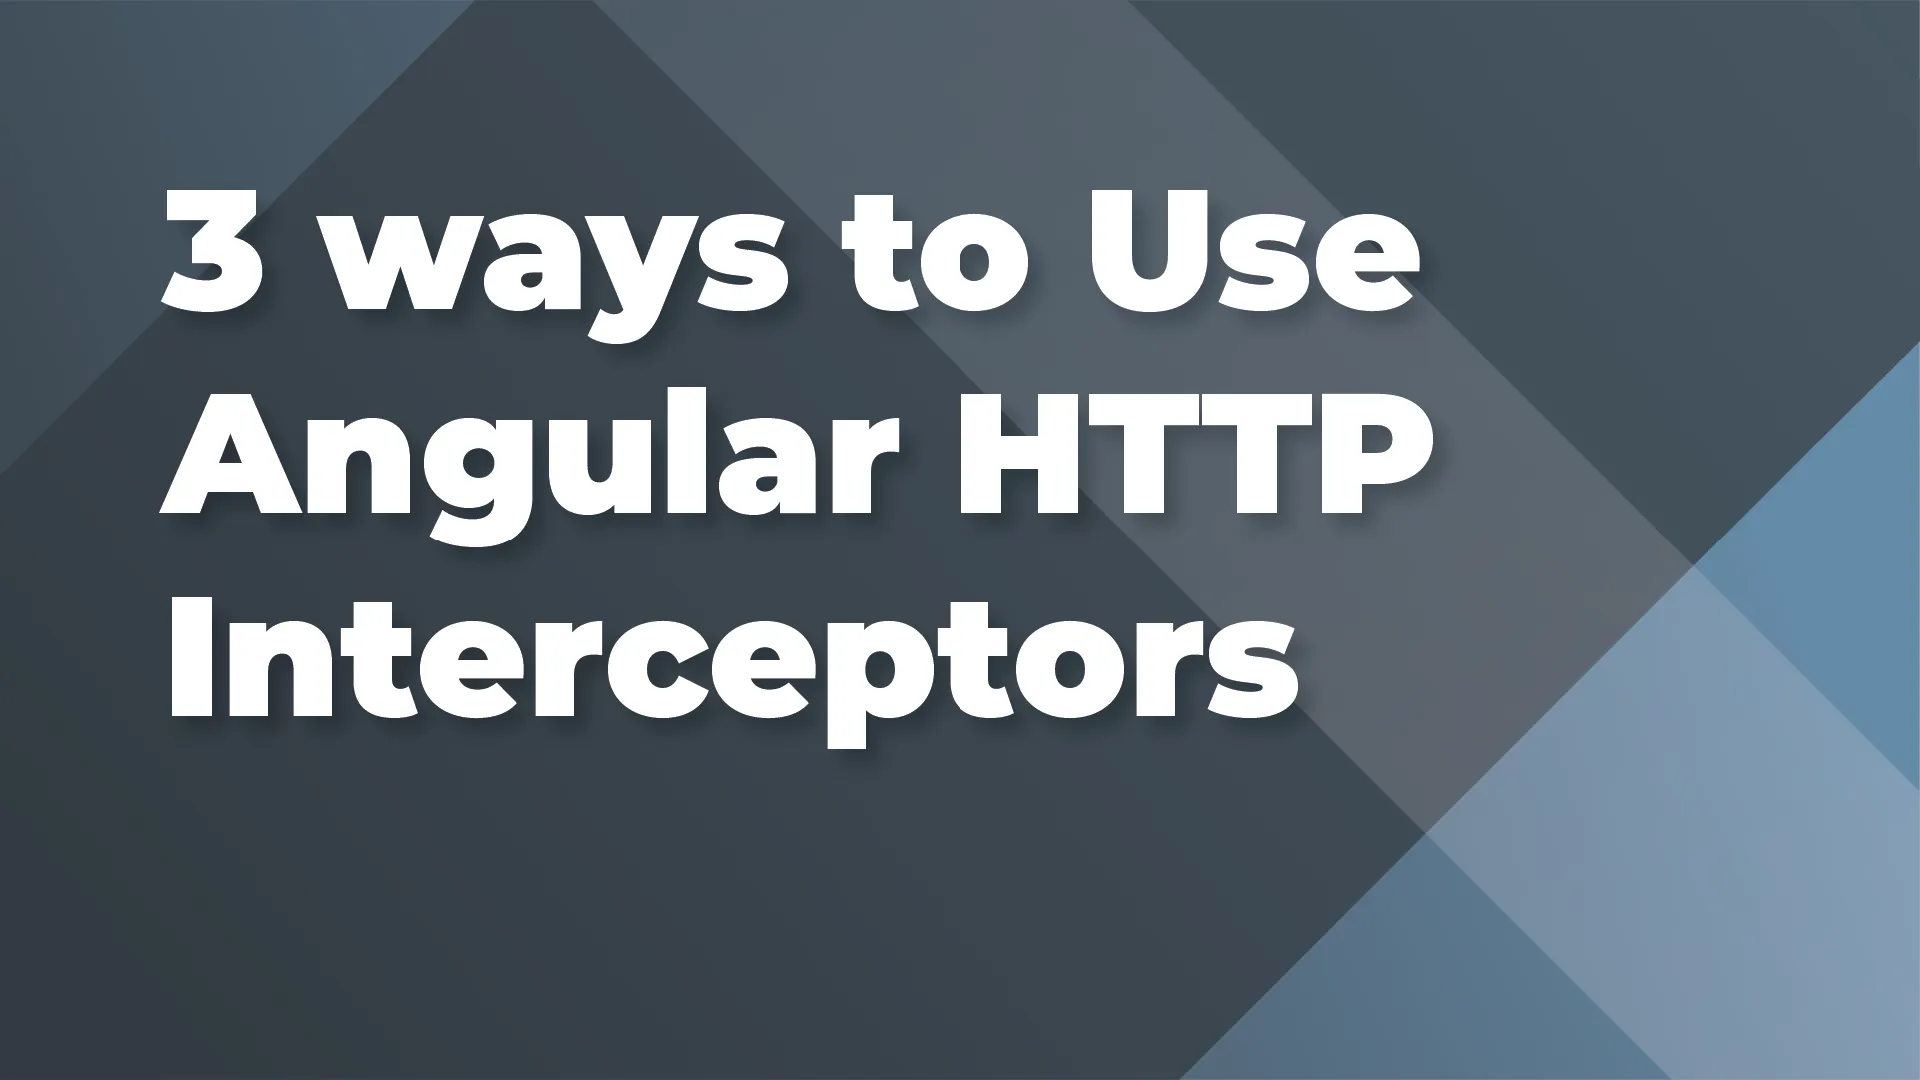 3 ways to use Angular HTTP Interceptors